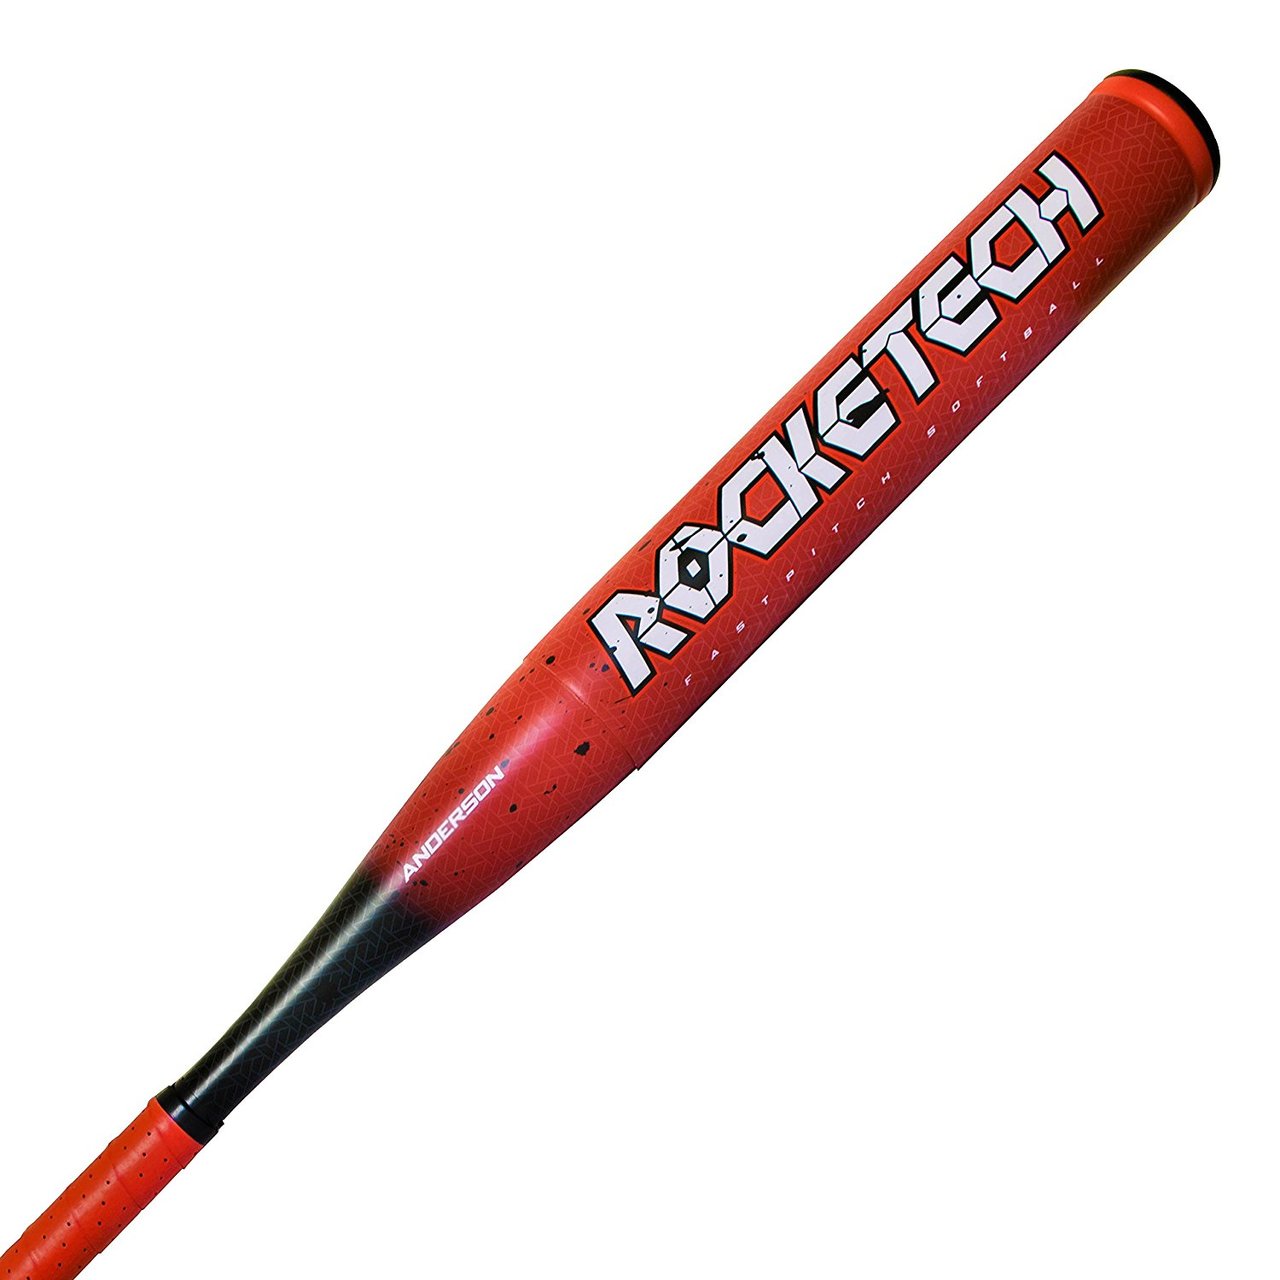 anderson-rocketech-2018-9-fastpitch-softball-bat-33-inch-24-oz 0170343324 Anderson 874147008415 <span>The <strong>2018 Rocketech -9 </strong>Fast Pitch Softball Bat is Virtually Bulletproof!